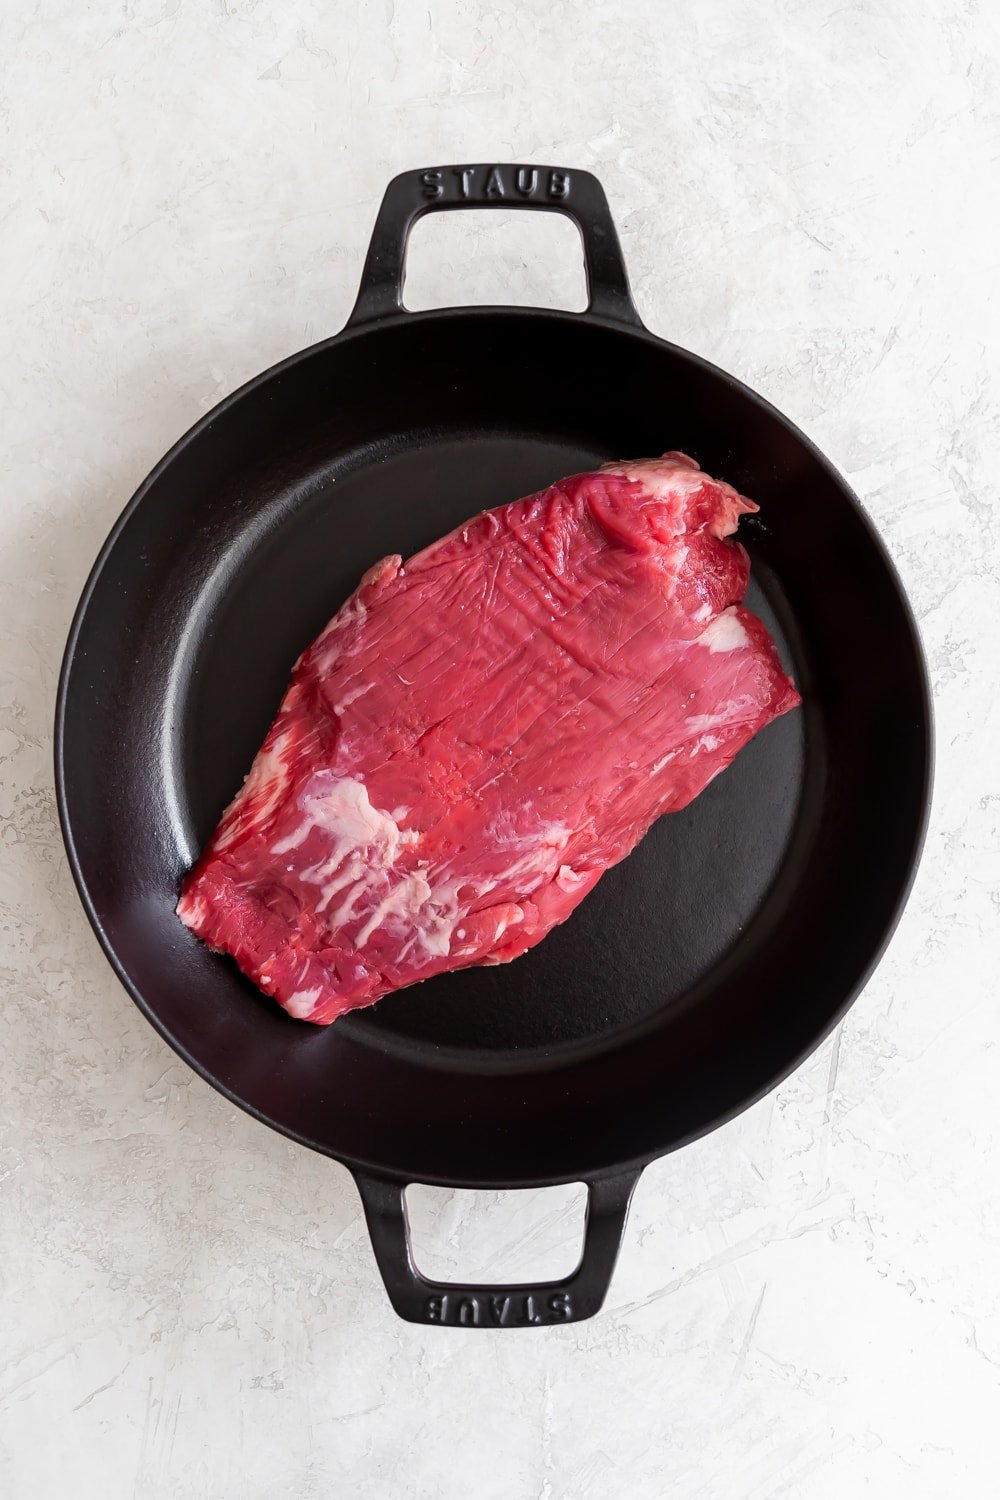 flank steak on a braiser